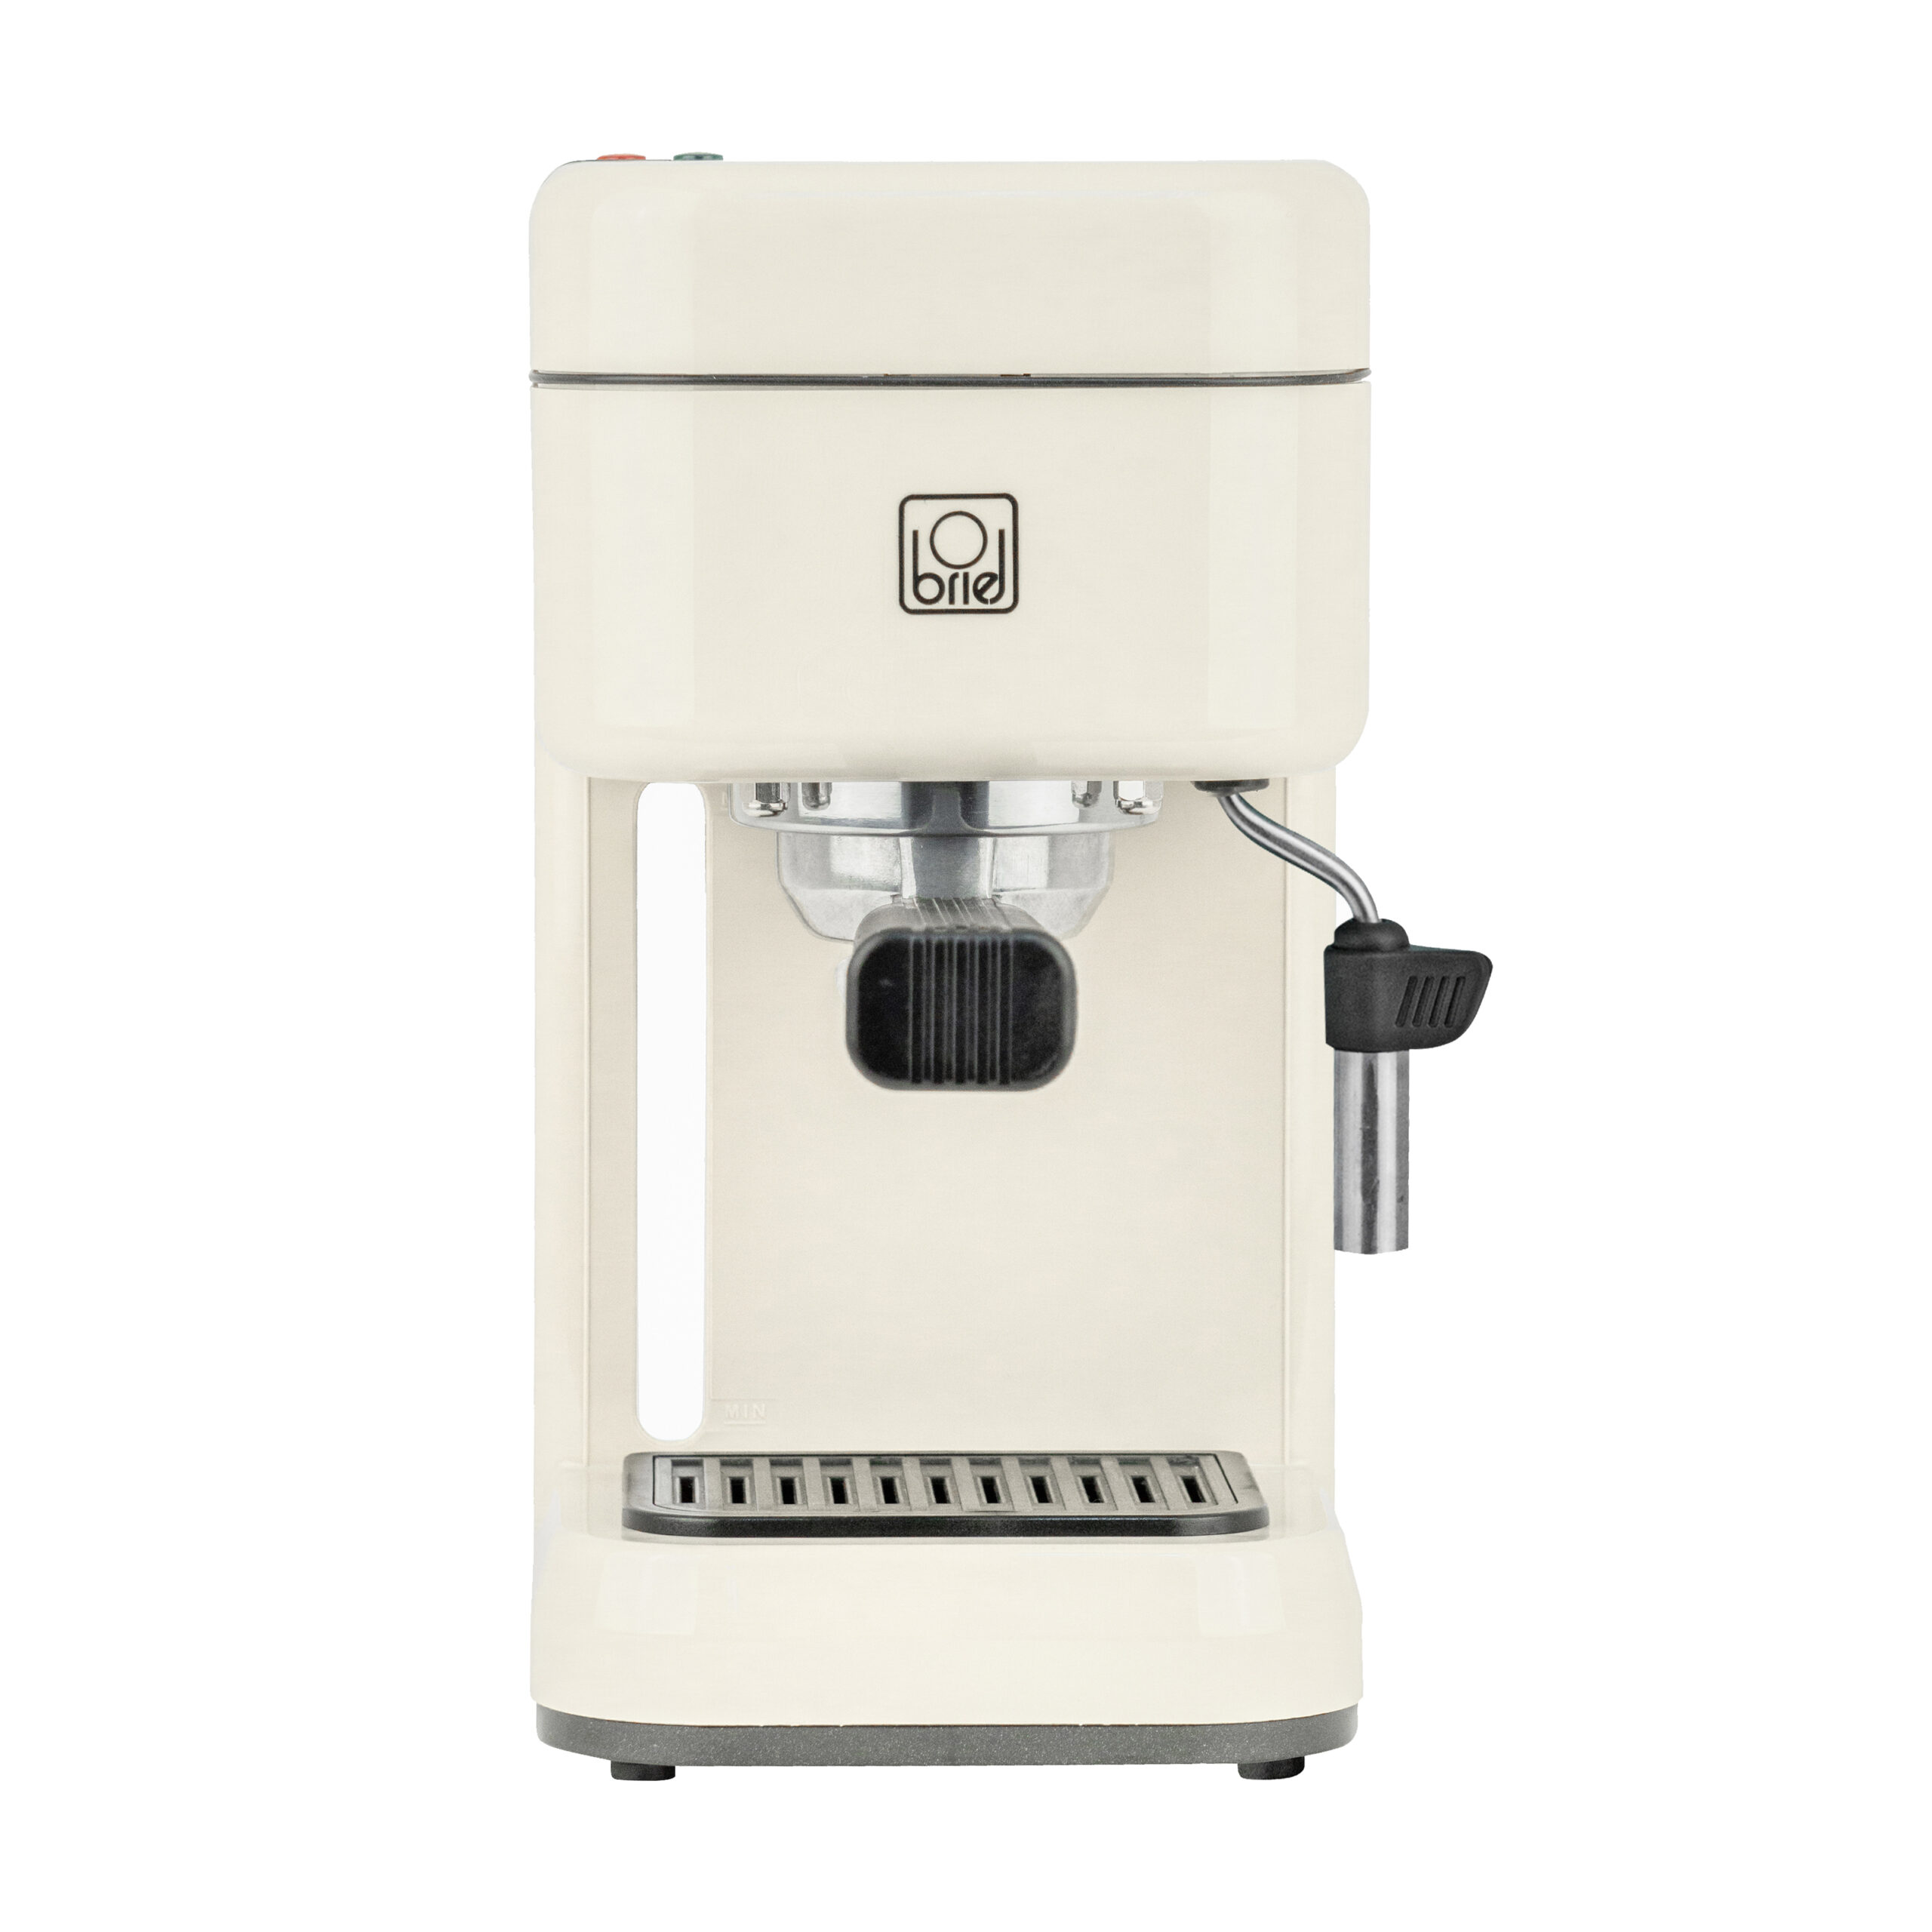 Maquina-cafe-espresso-B14-IVORY-1-scaled-1.jpg